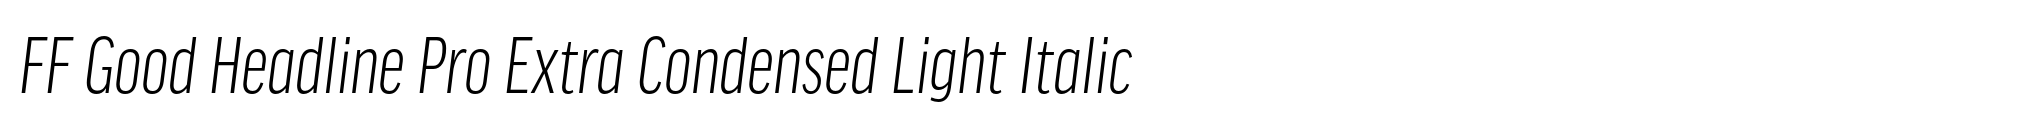 FF Good Headline Pro Extra Condensed Light Italic image